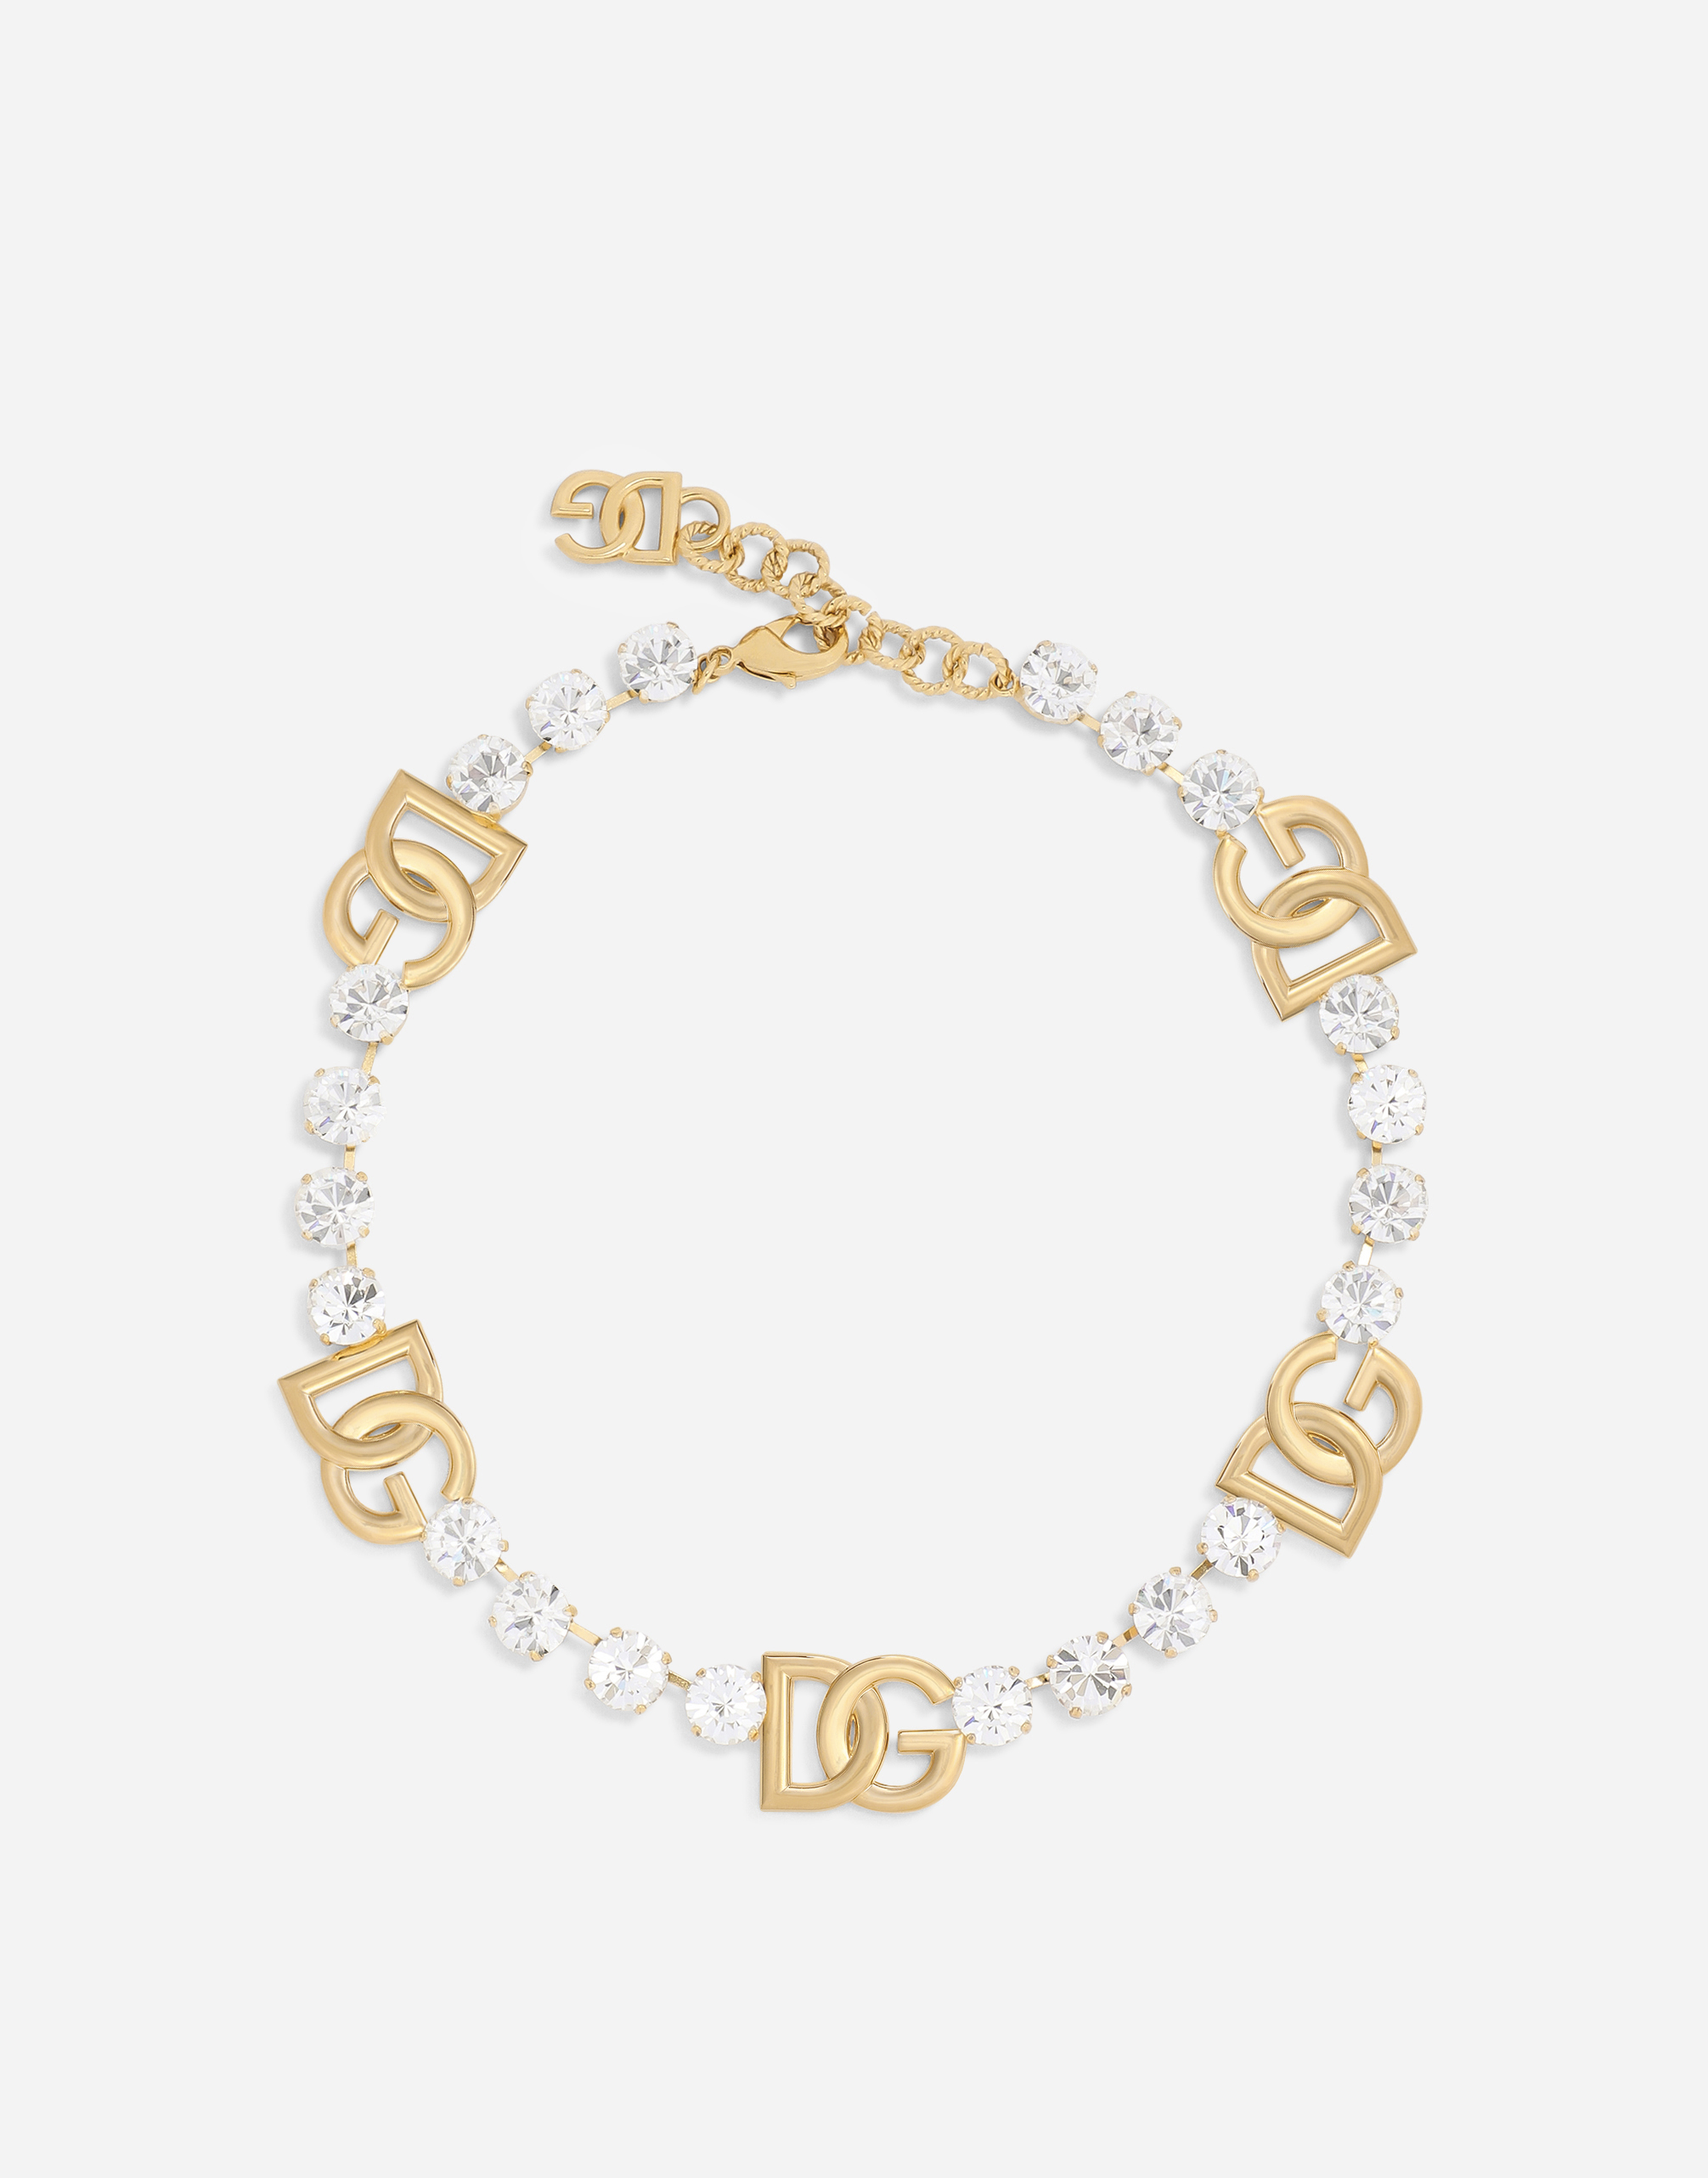 KIM DOLCE&GABBANA Rhinestone necklace with DG logo in Gold